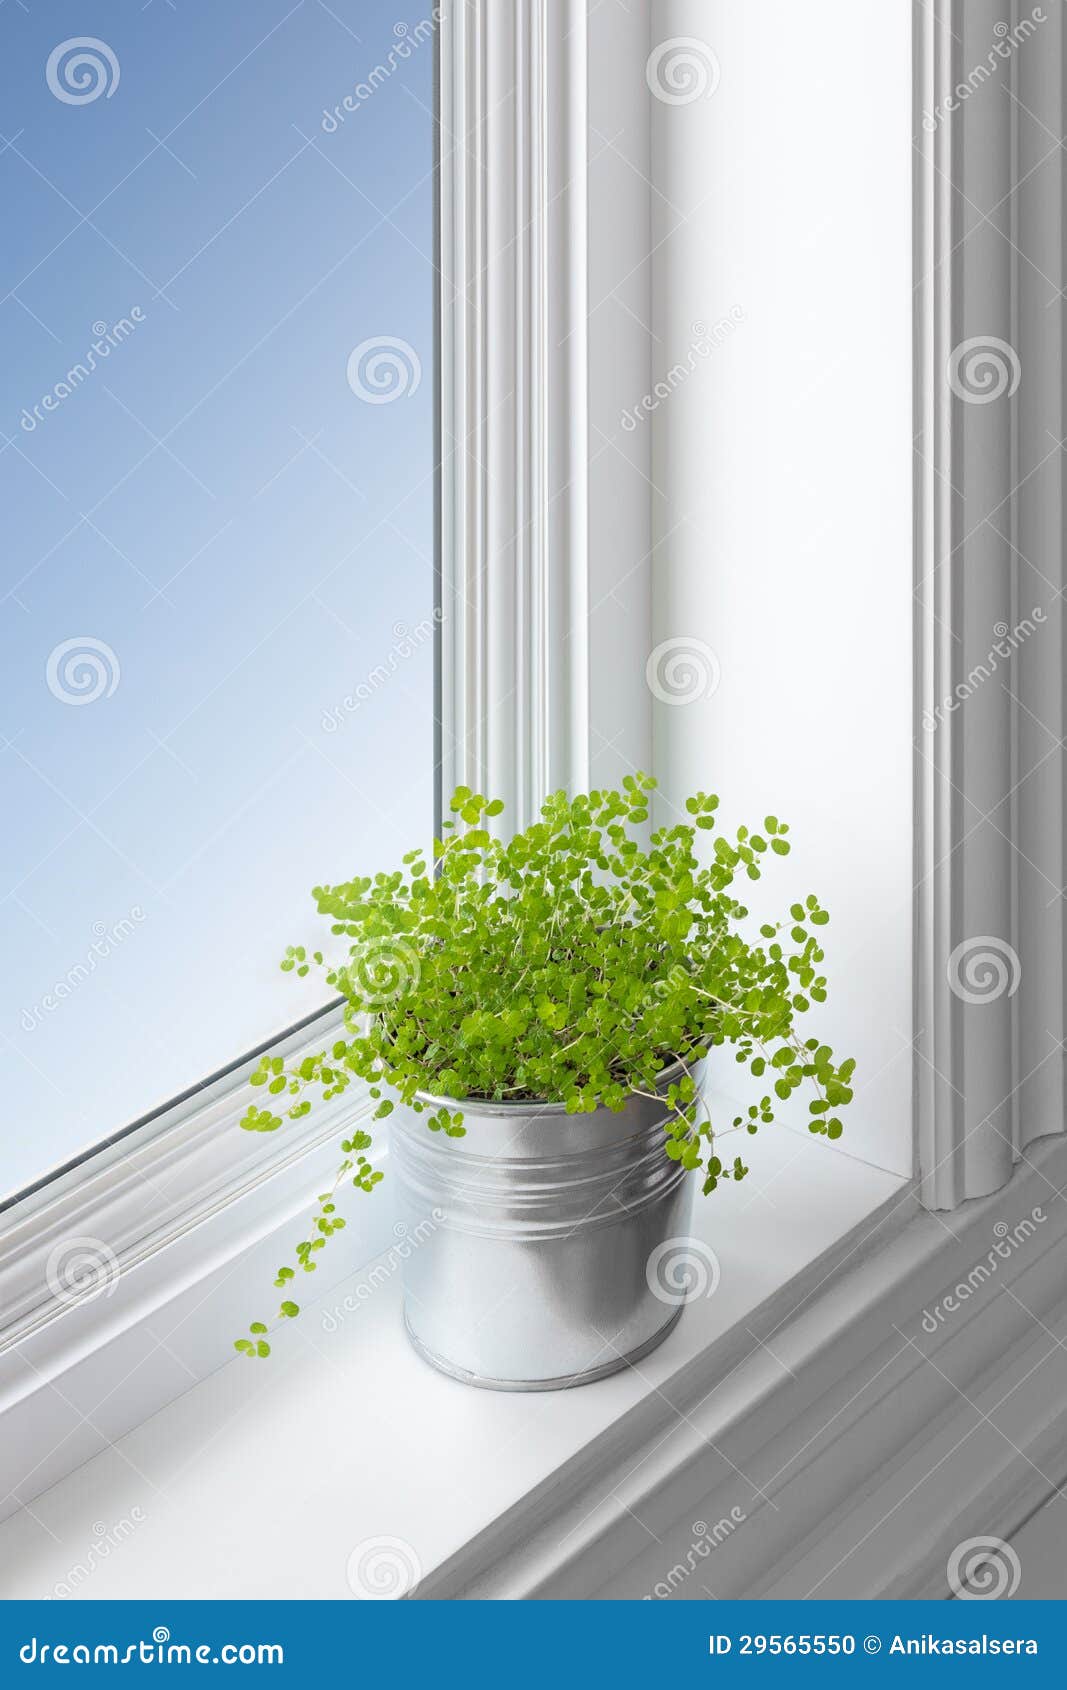 green plant on a window sill